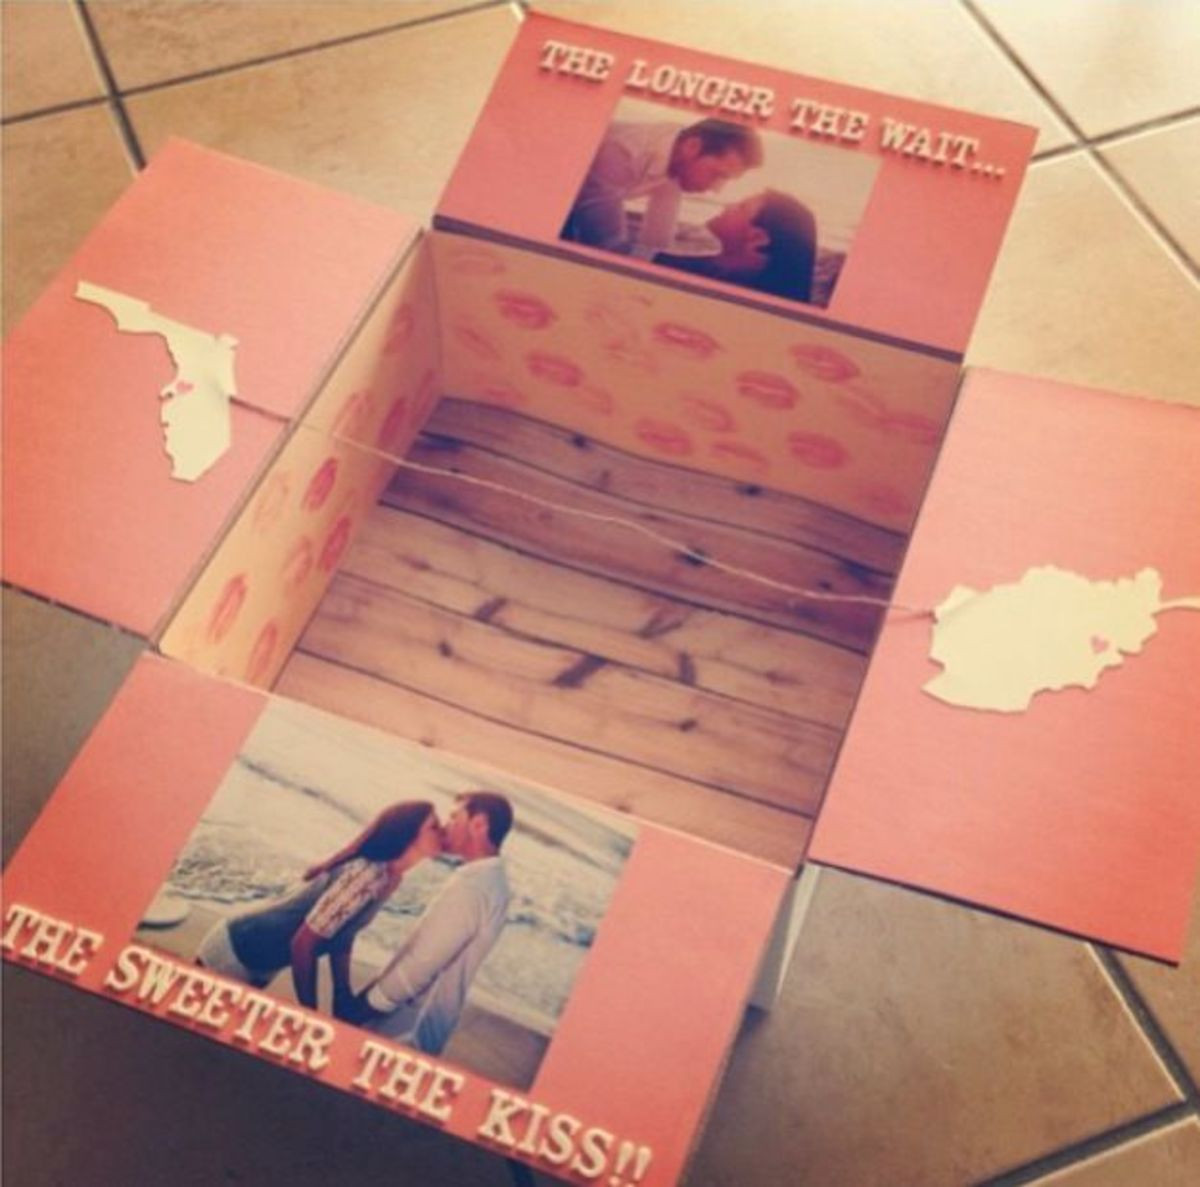 Valentine Day Gift Ideas For Him Pinterest
 DIY Romantic Valentine s Day Ideas for Him